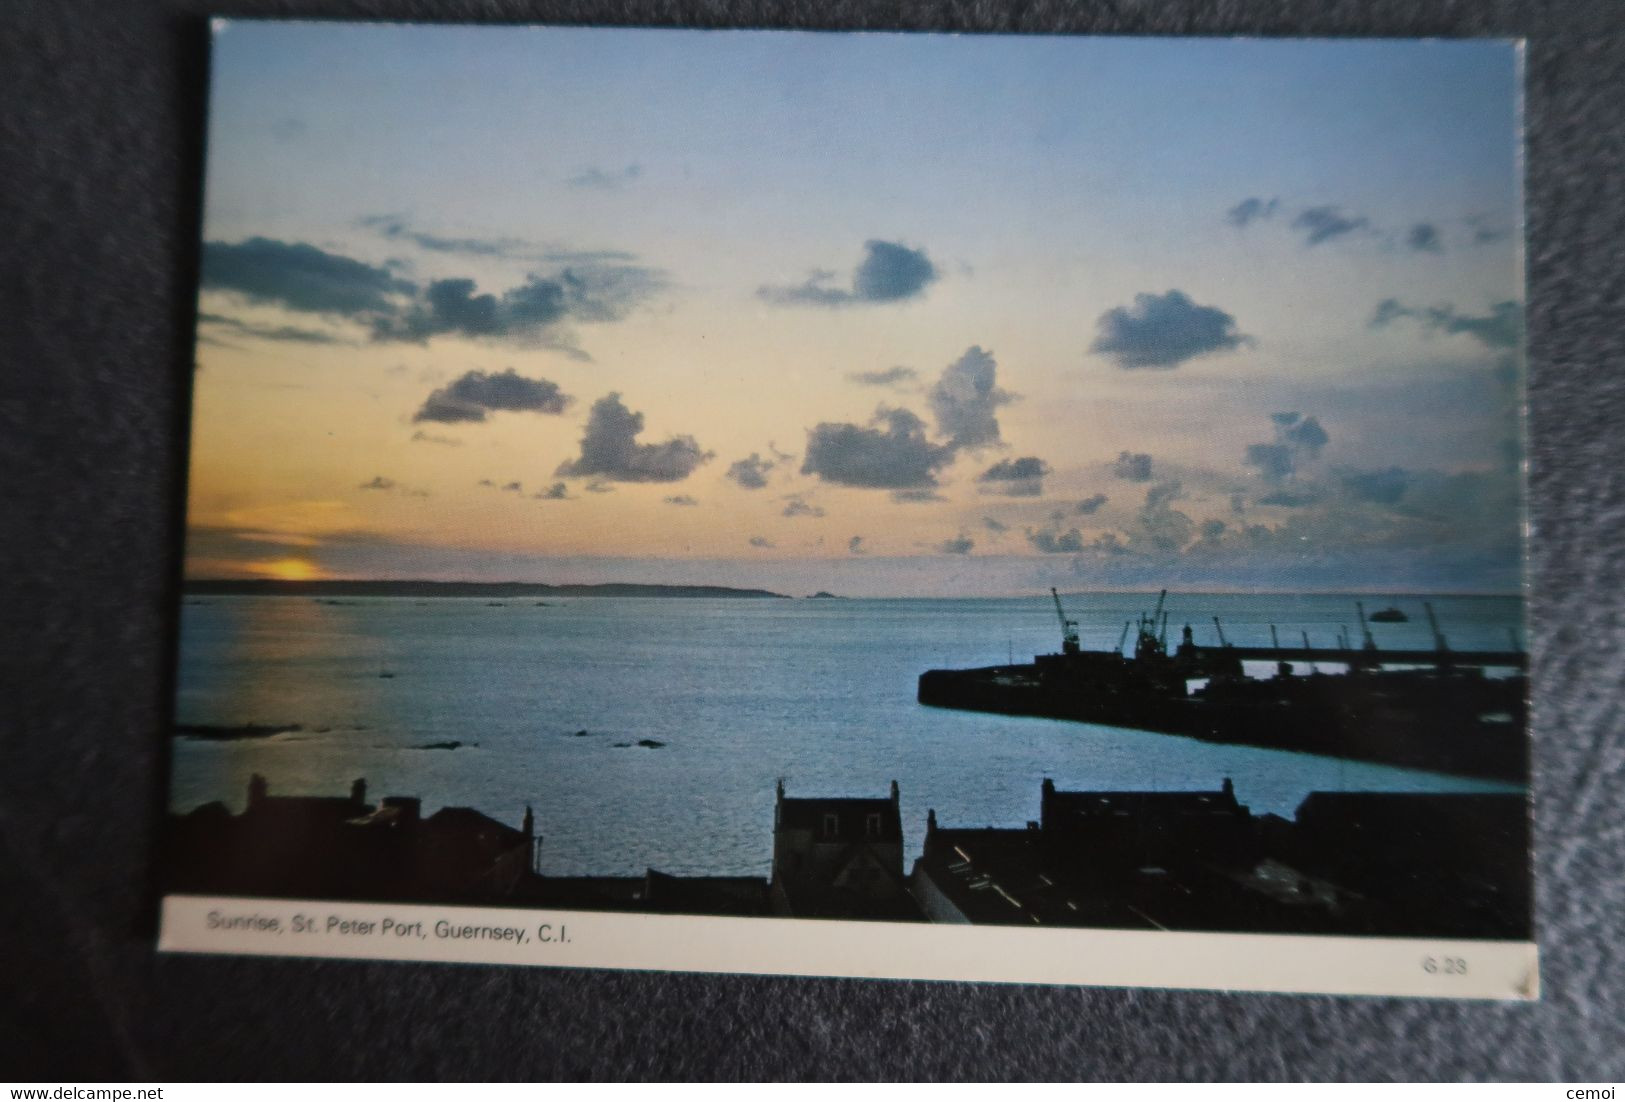 CP - Sunrise - St. Peter Port - Guernsey - C. I. - Sark